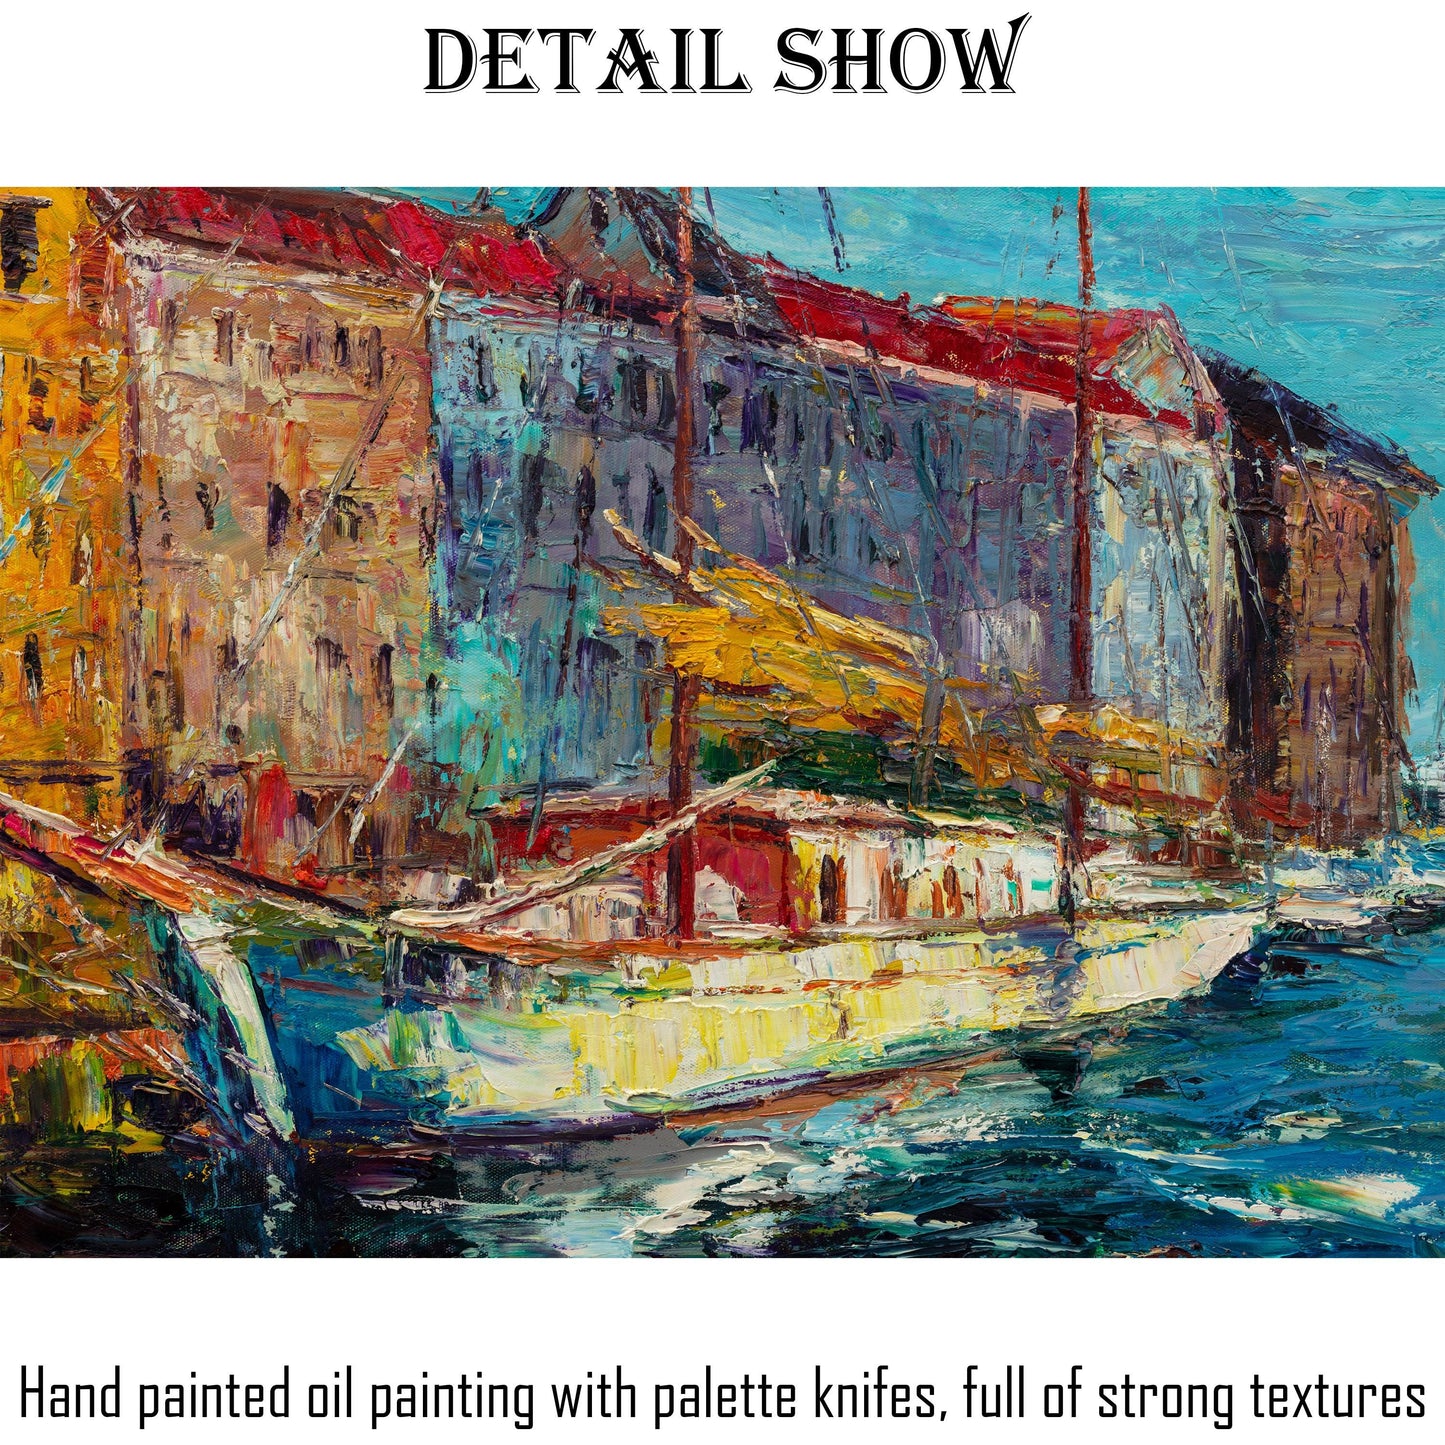 Venice Oil Painting, Palette Knife Oil Painting, Oil Painting Original, Contemporary Painting, Venice Gondola, Oil Painting, Canvas Art